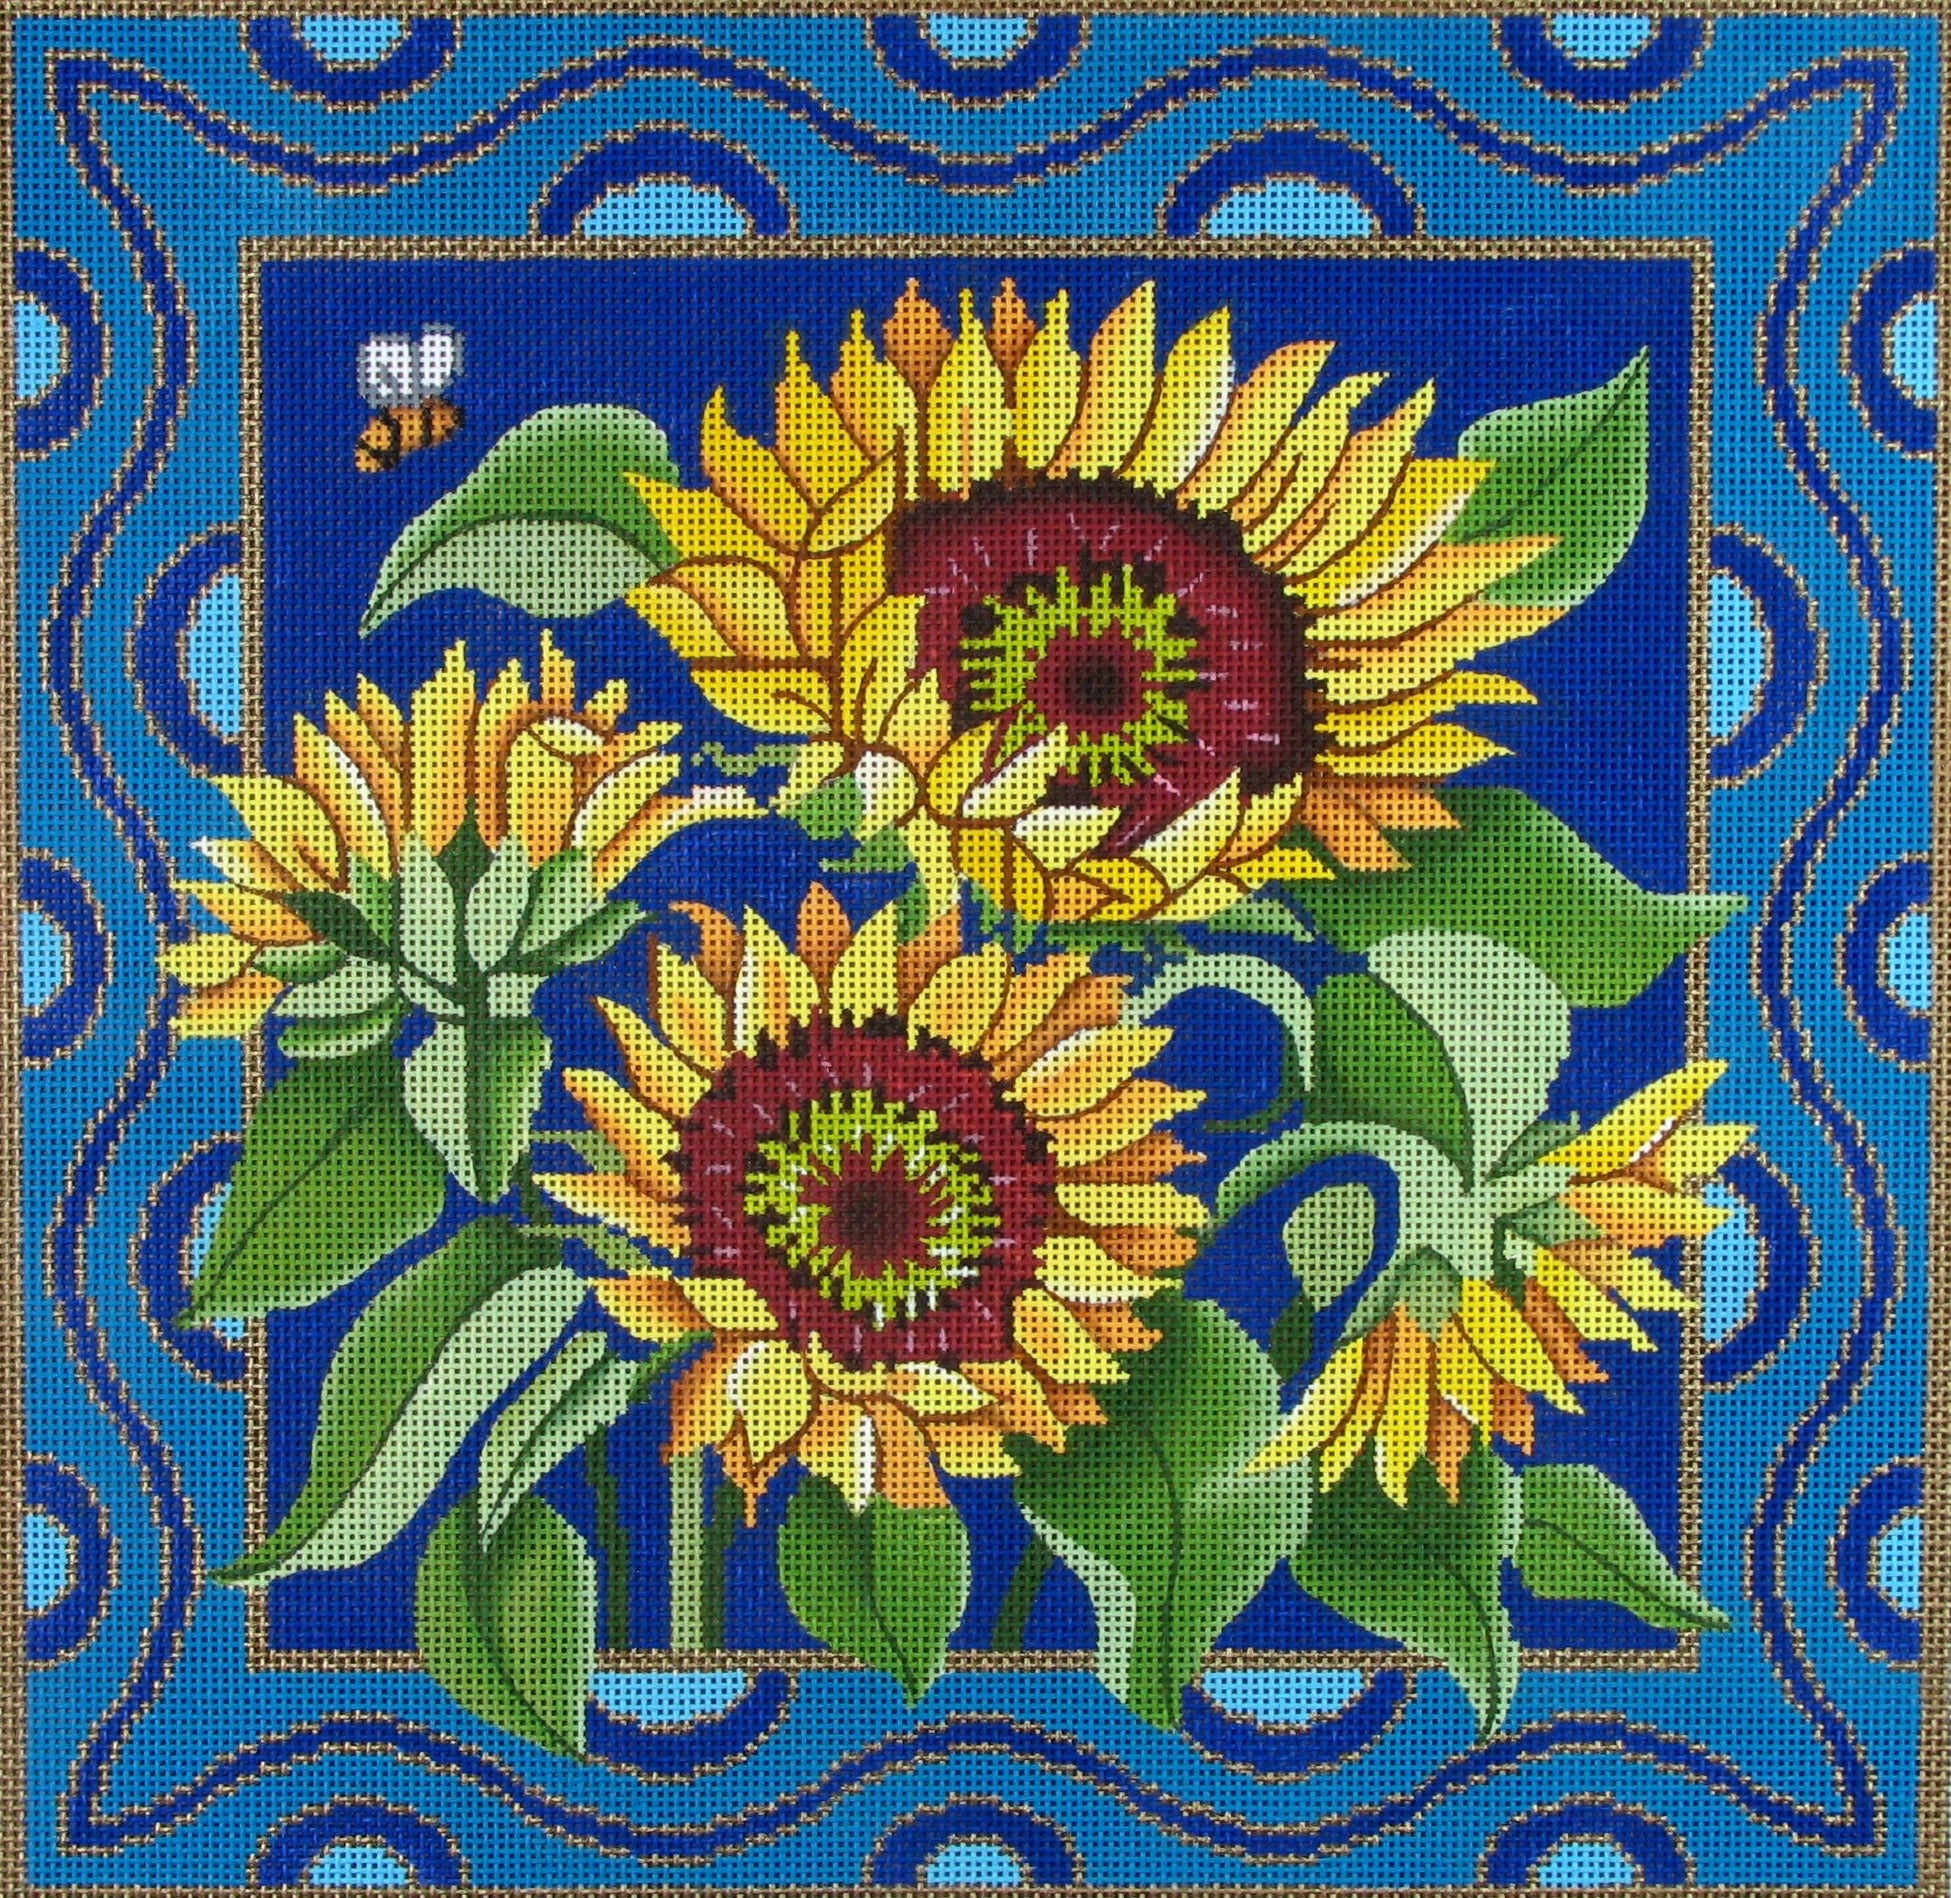 Sunflowers, 13ct